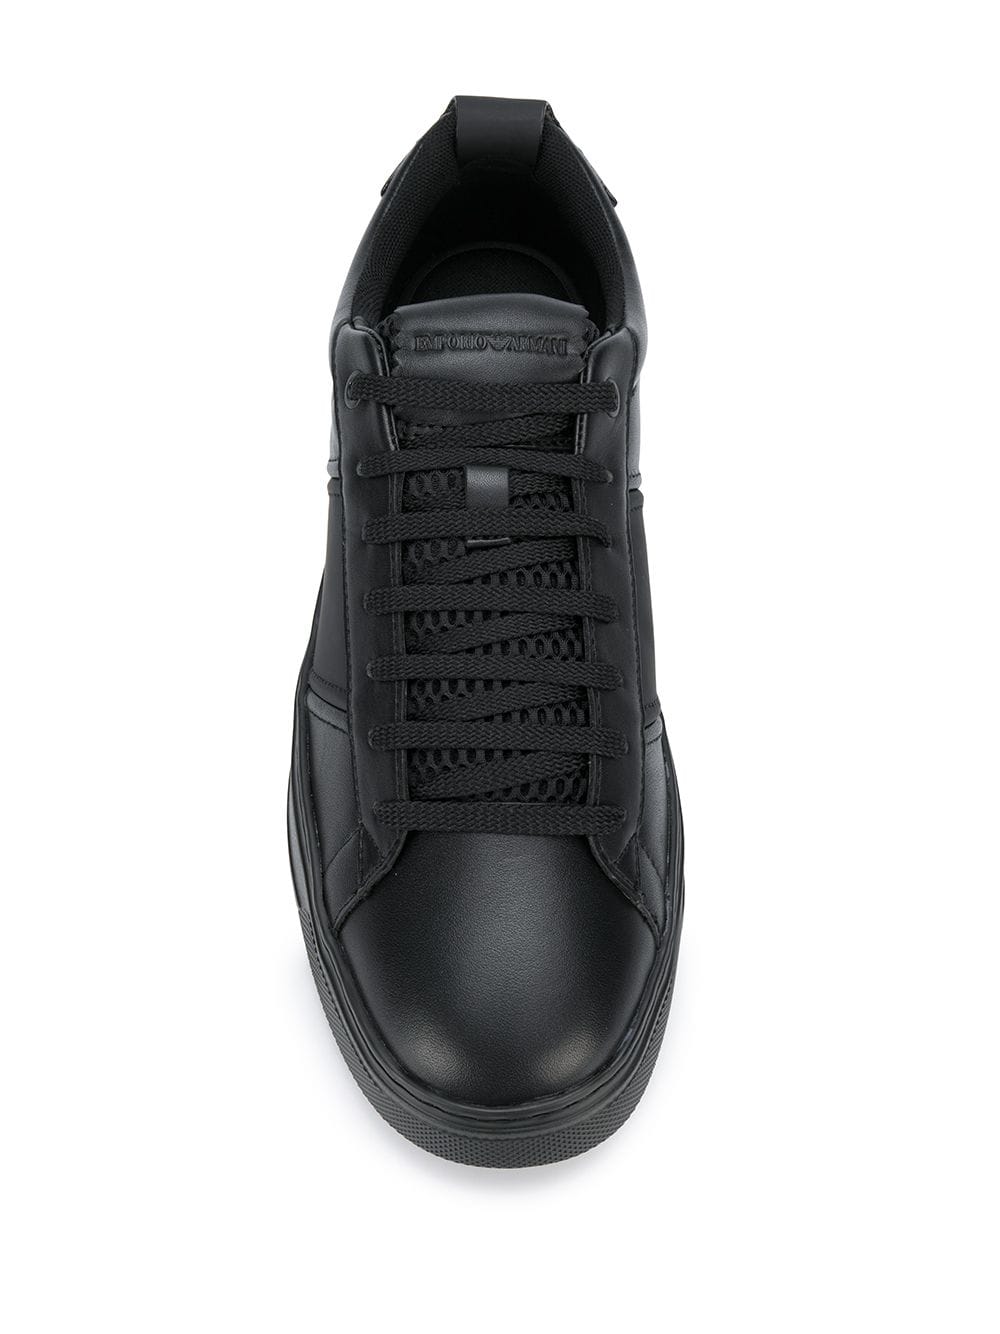 Emporio Armani Smooth Surface Sneakers X4X287XM096 Emporio Armani ktmart 3